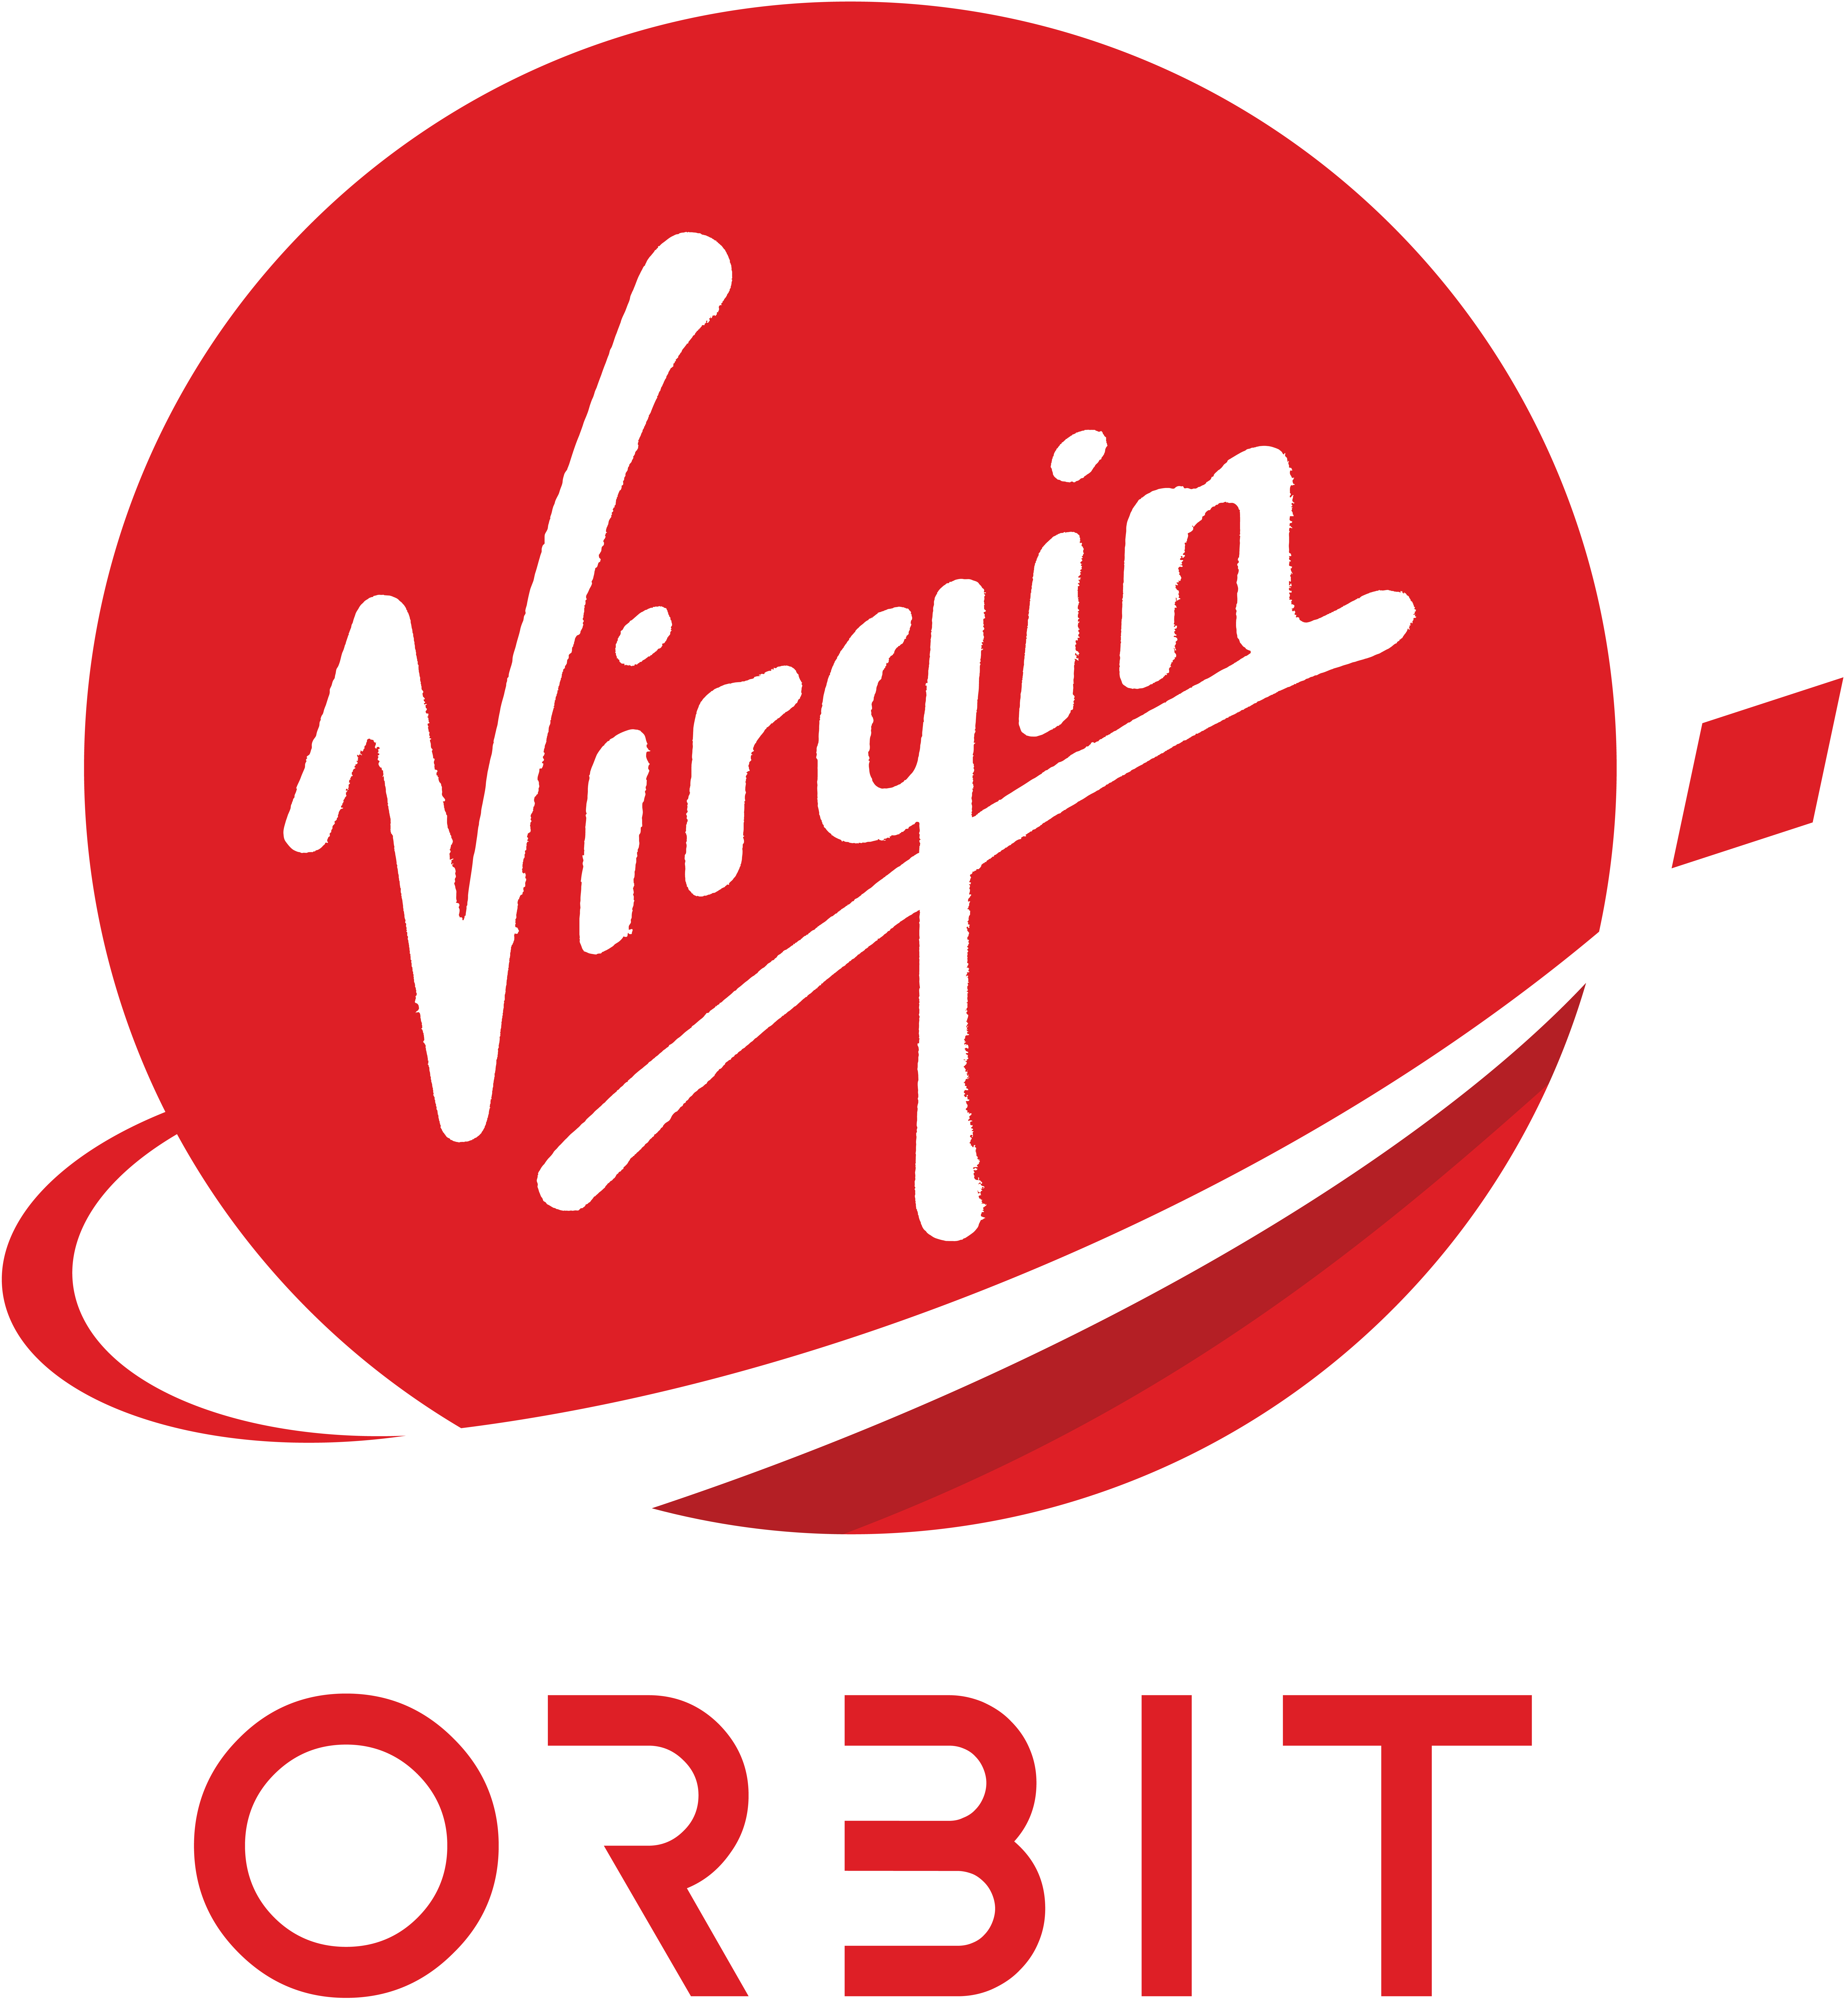 Virgin Orbit Ричарда Брэнсона уволит 675 сотрудников — 85% штата.